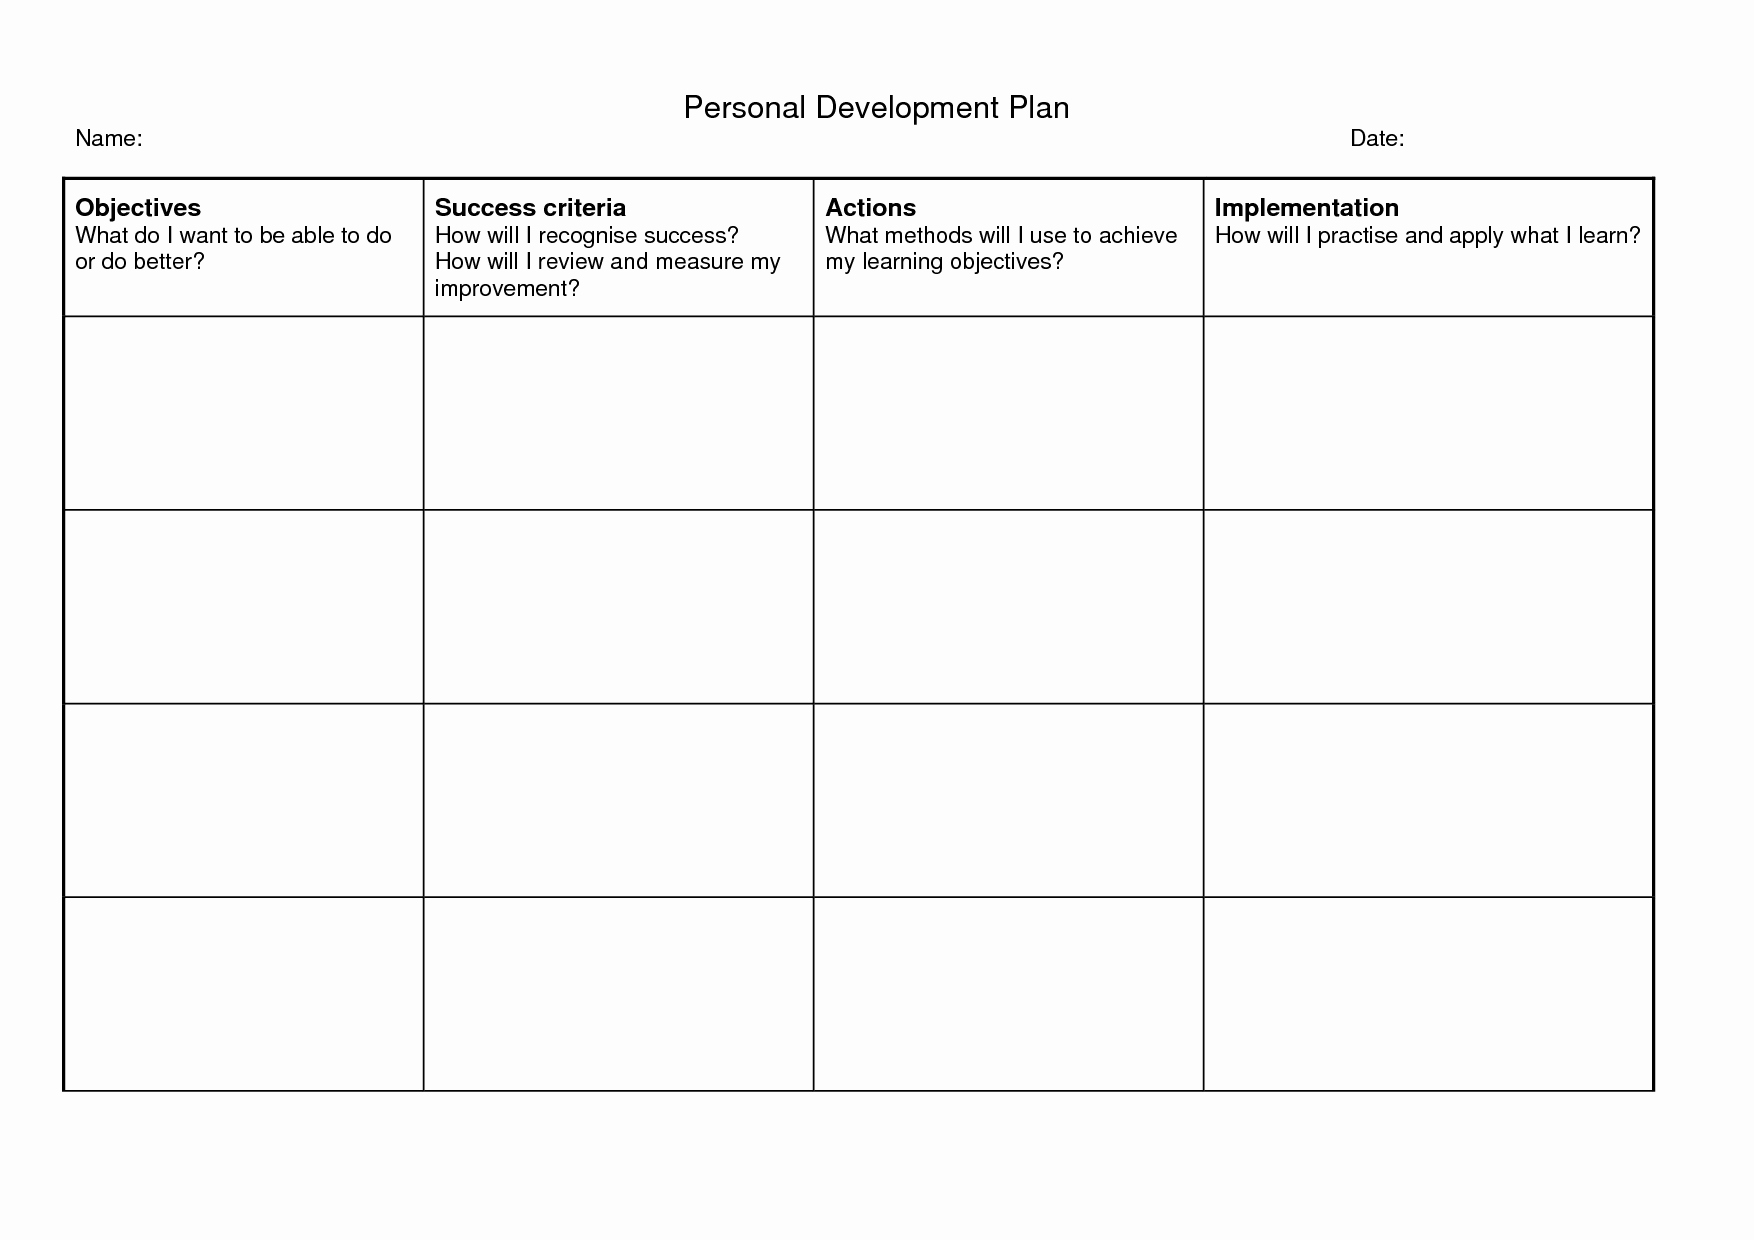 Personal Development Plan Template Lovely 6 Free Personal Development Plan Templates Excel Pdf formats